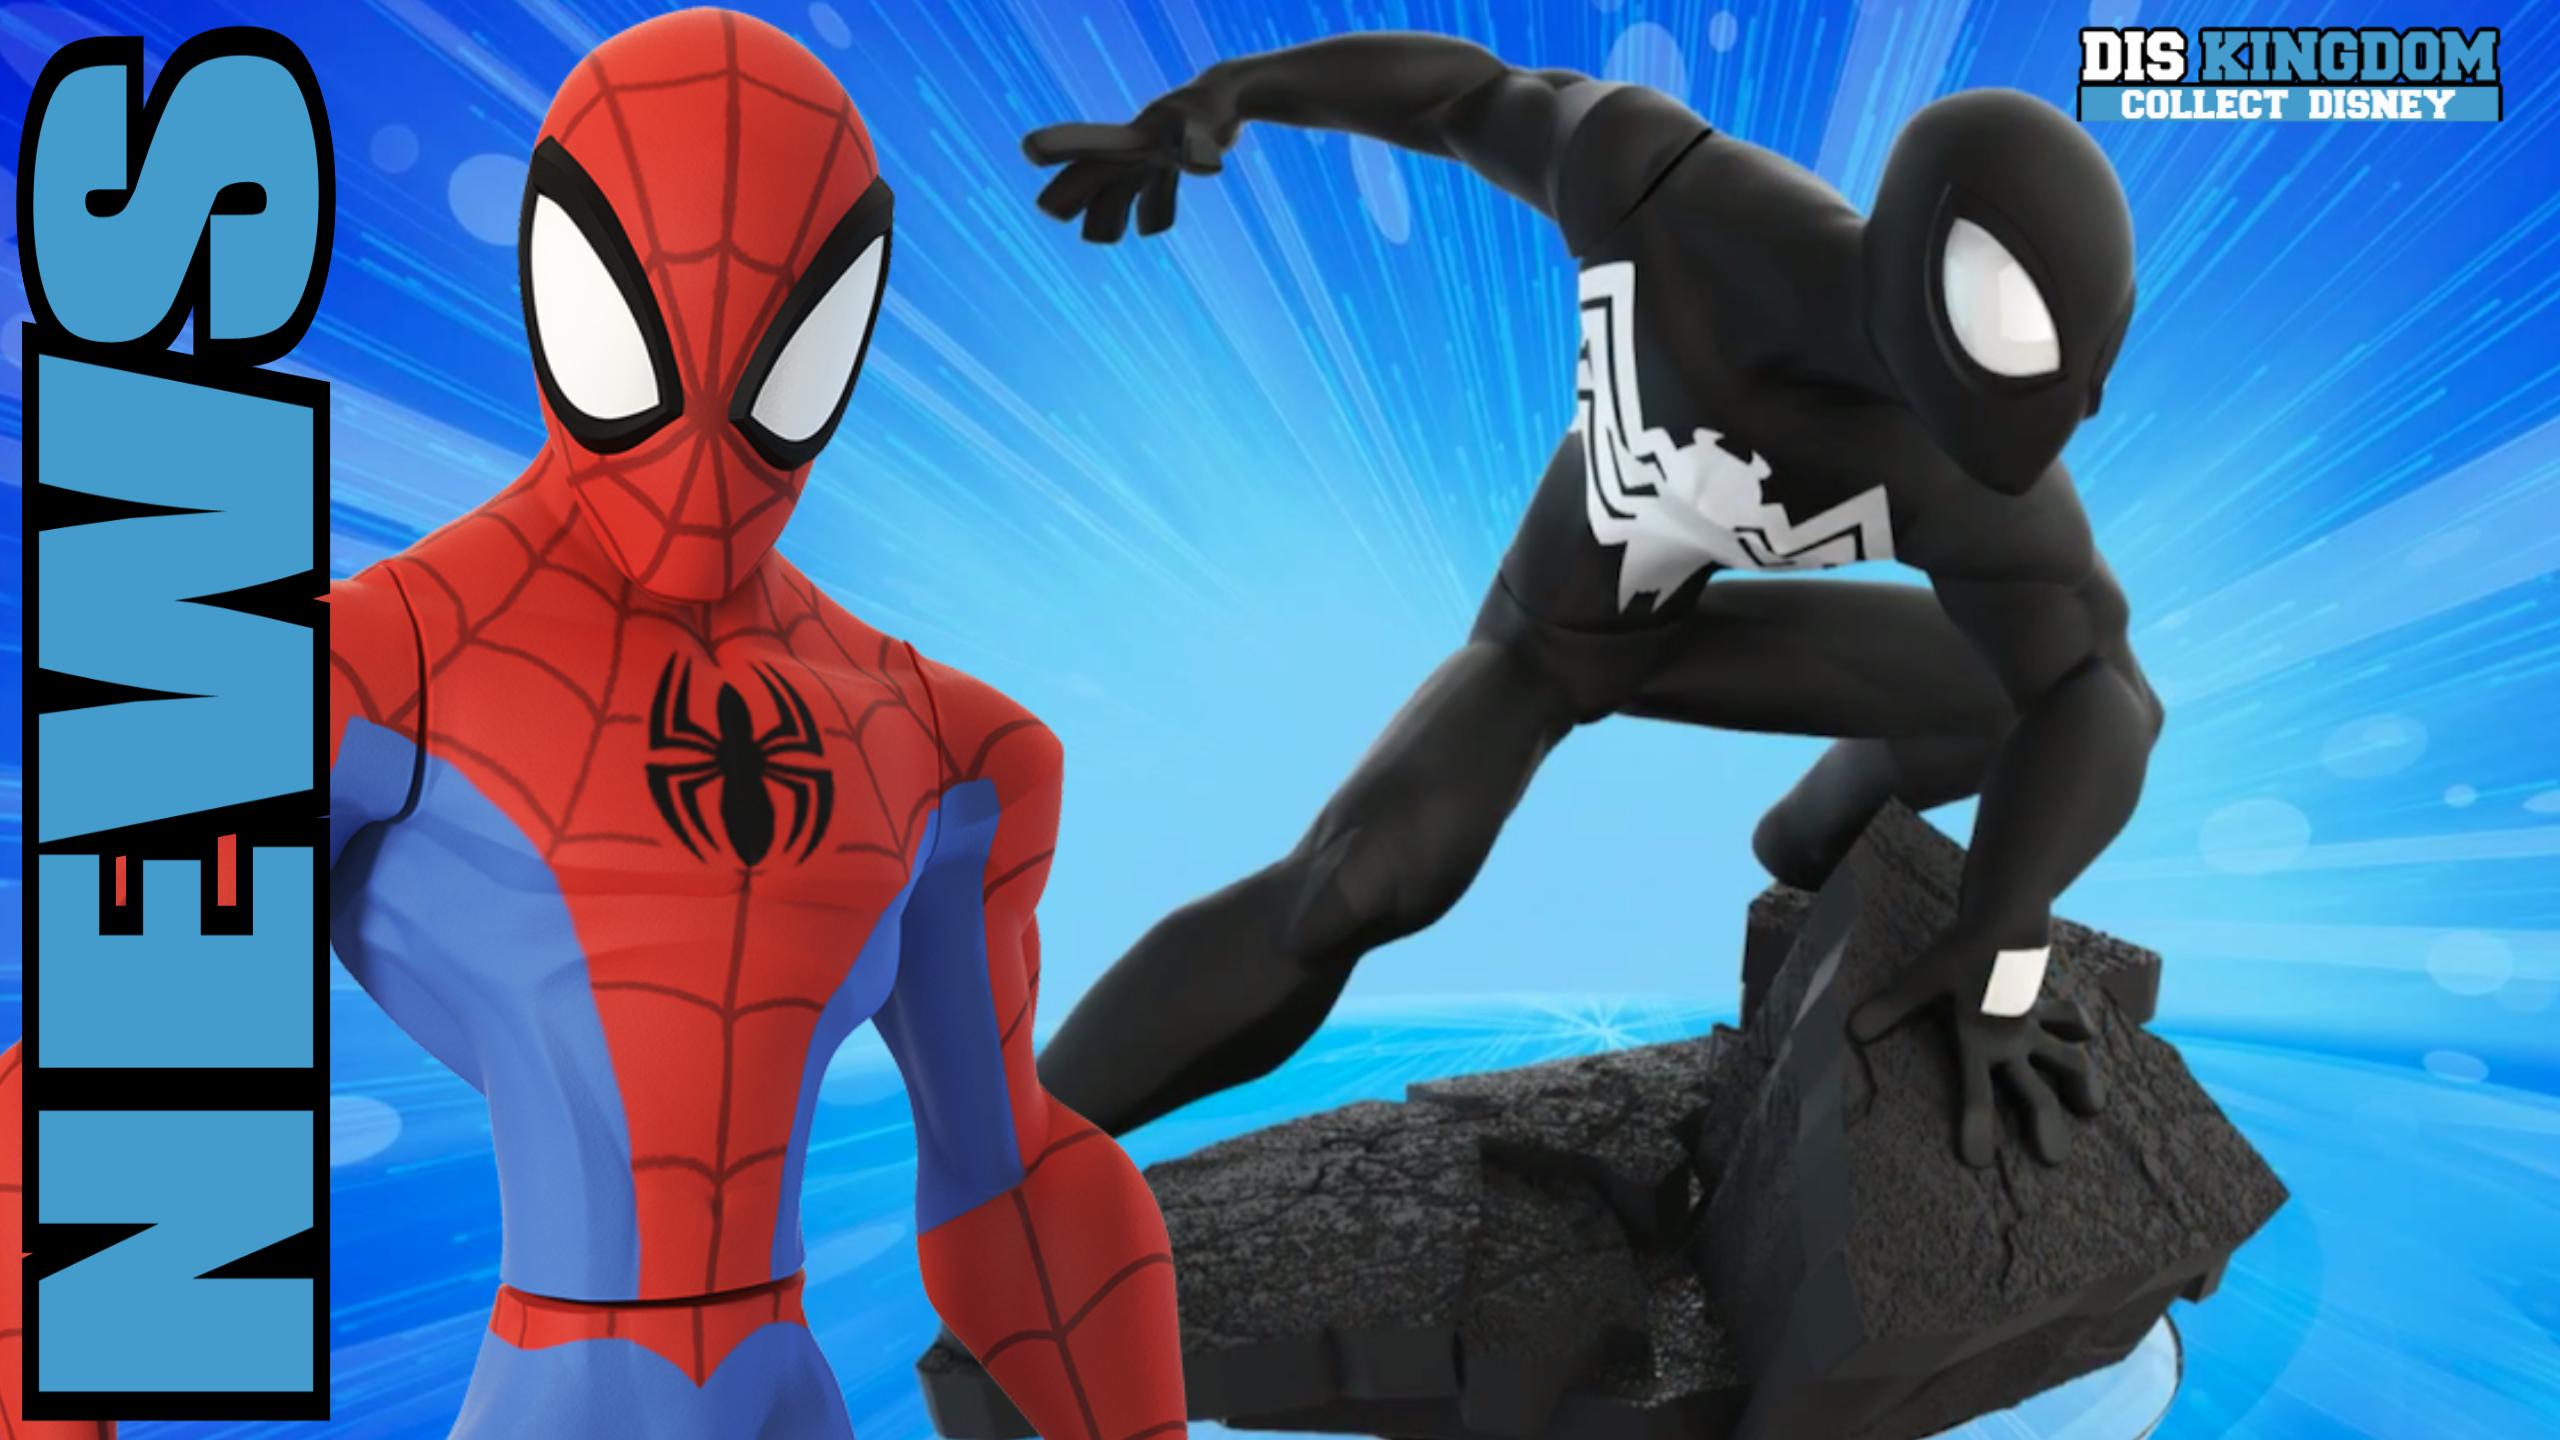 Black Suit Spider-Man Altered Following Latest Disney Infinity 30 Patch   DisKingdomcom